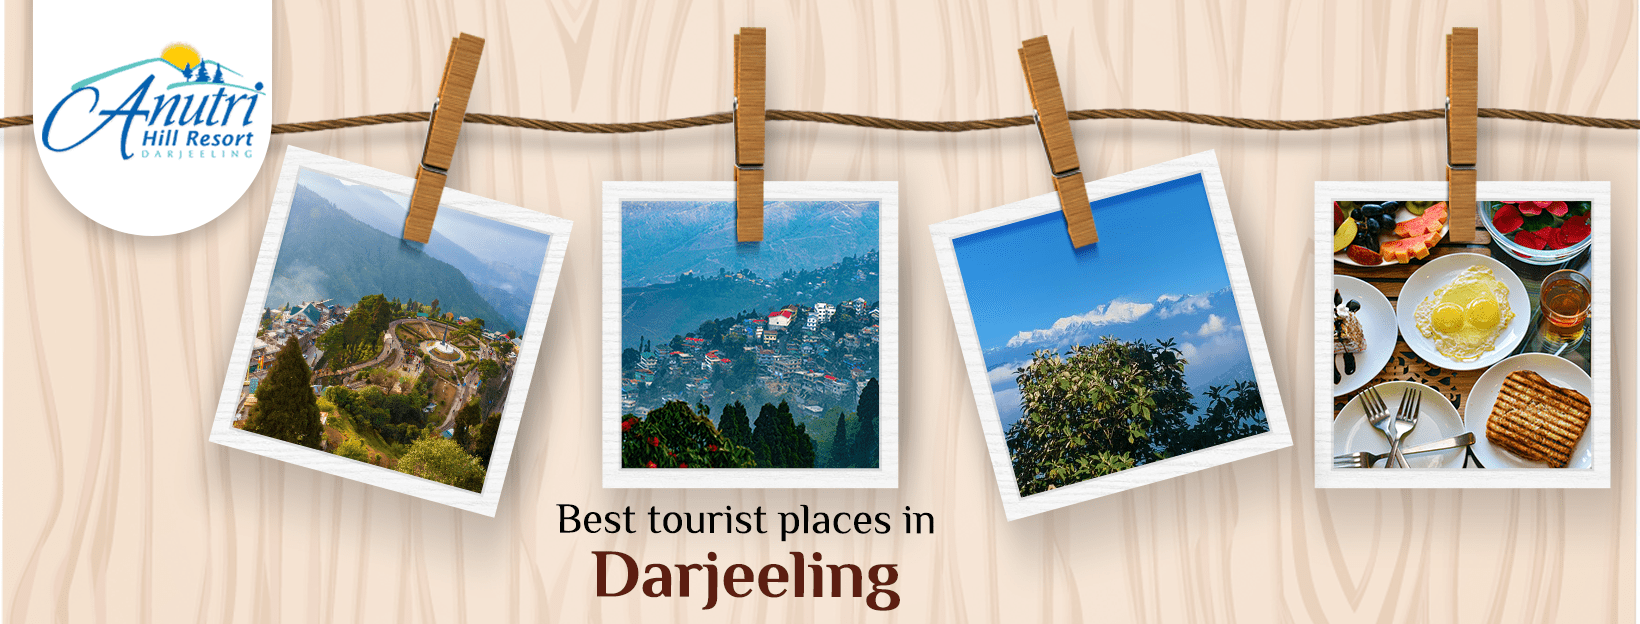 Best tourist places in Darjeeling